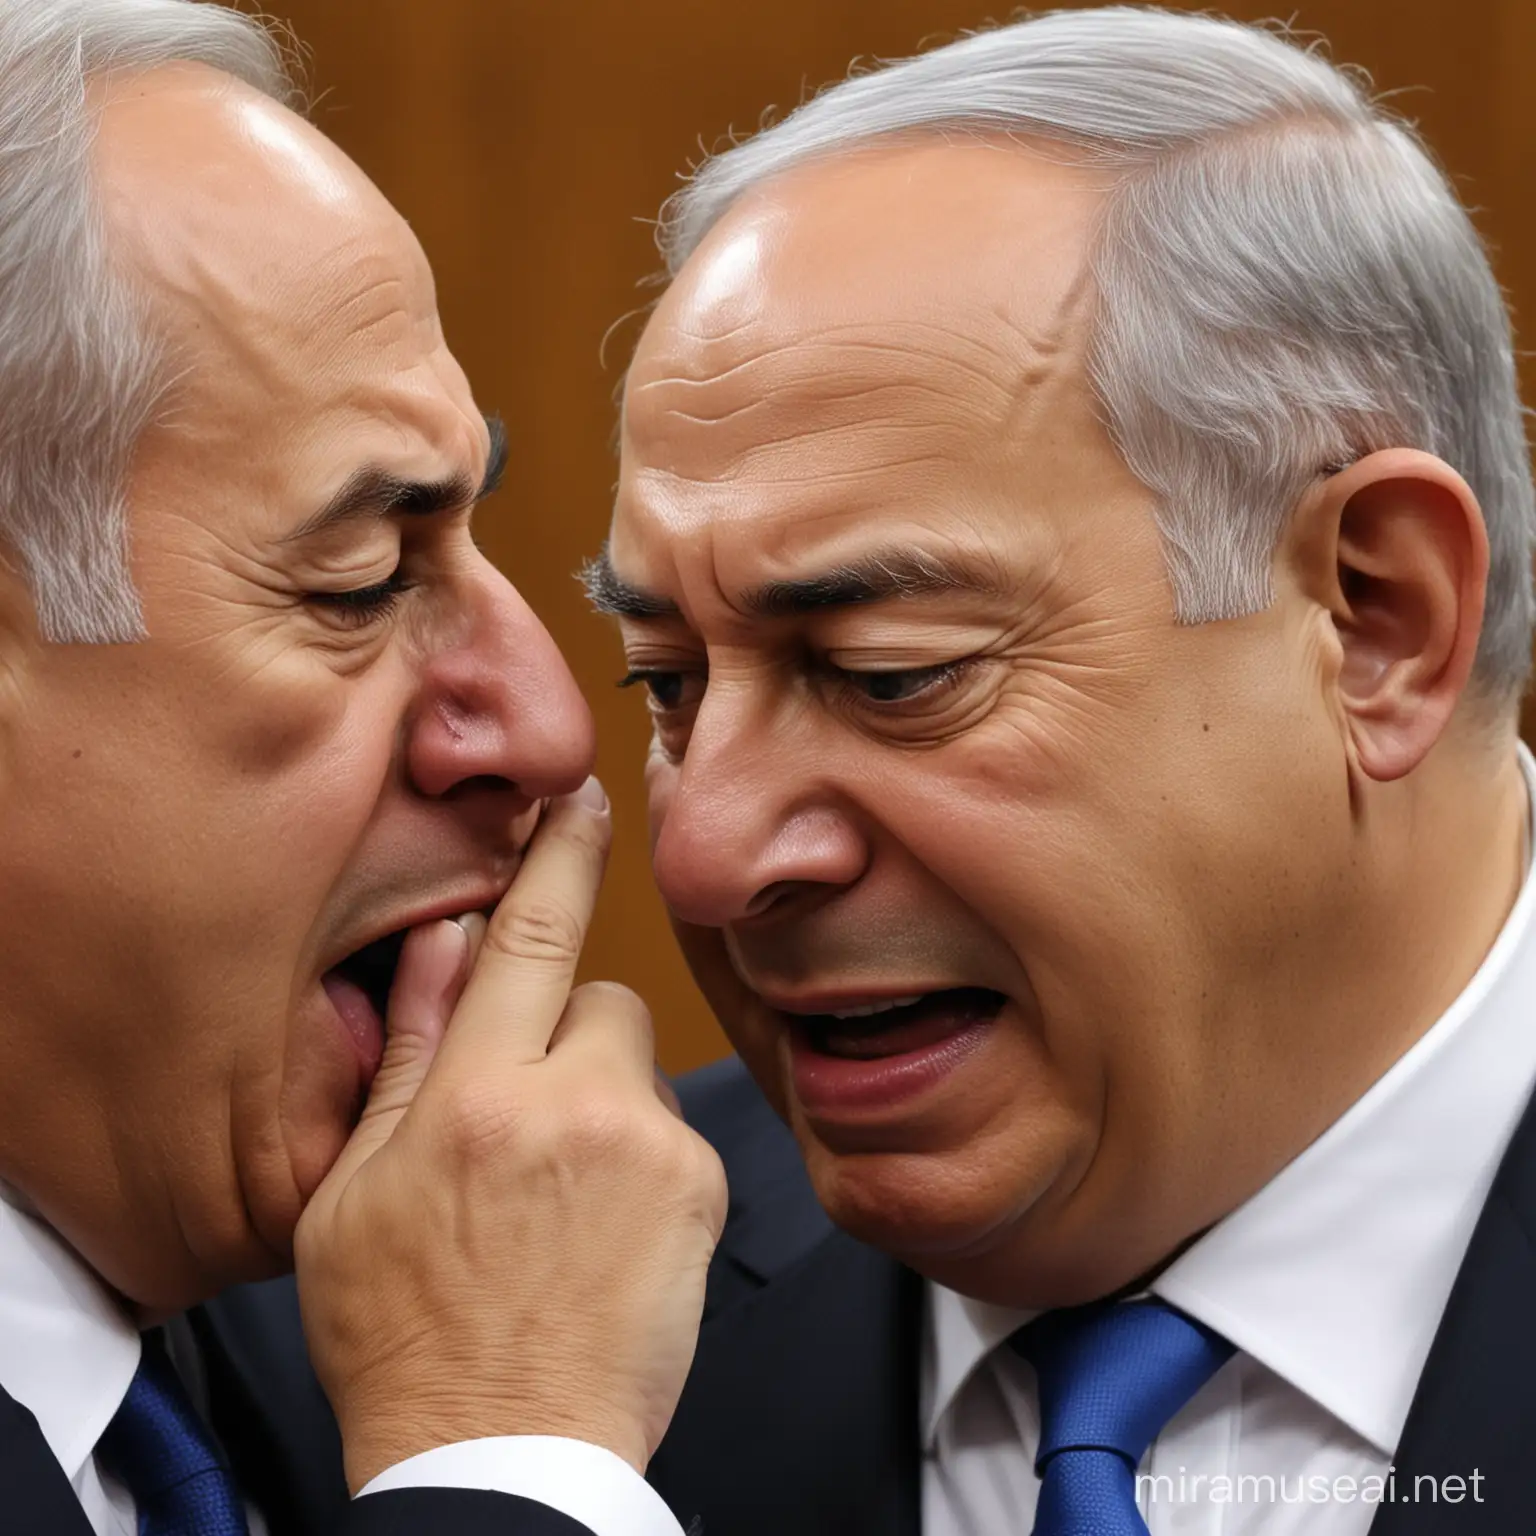 israeli prime minister benjamin netanyahu crying loudly